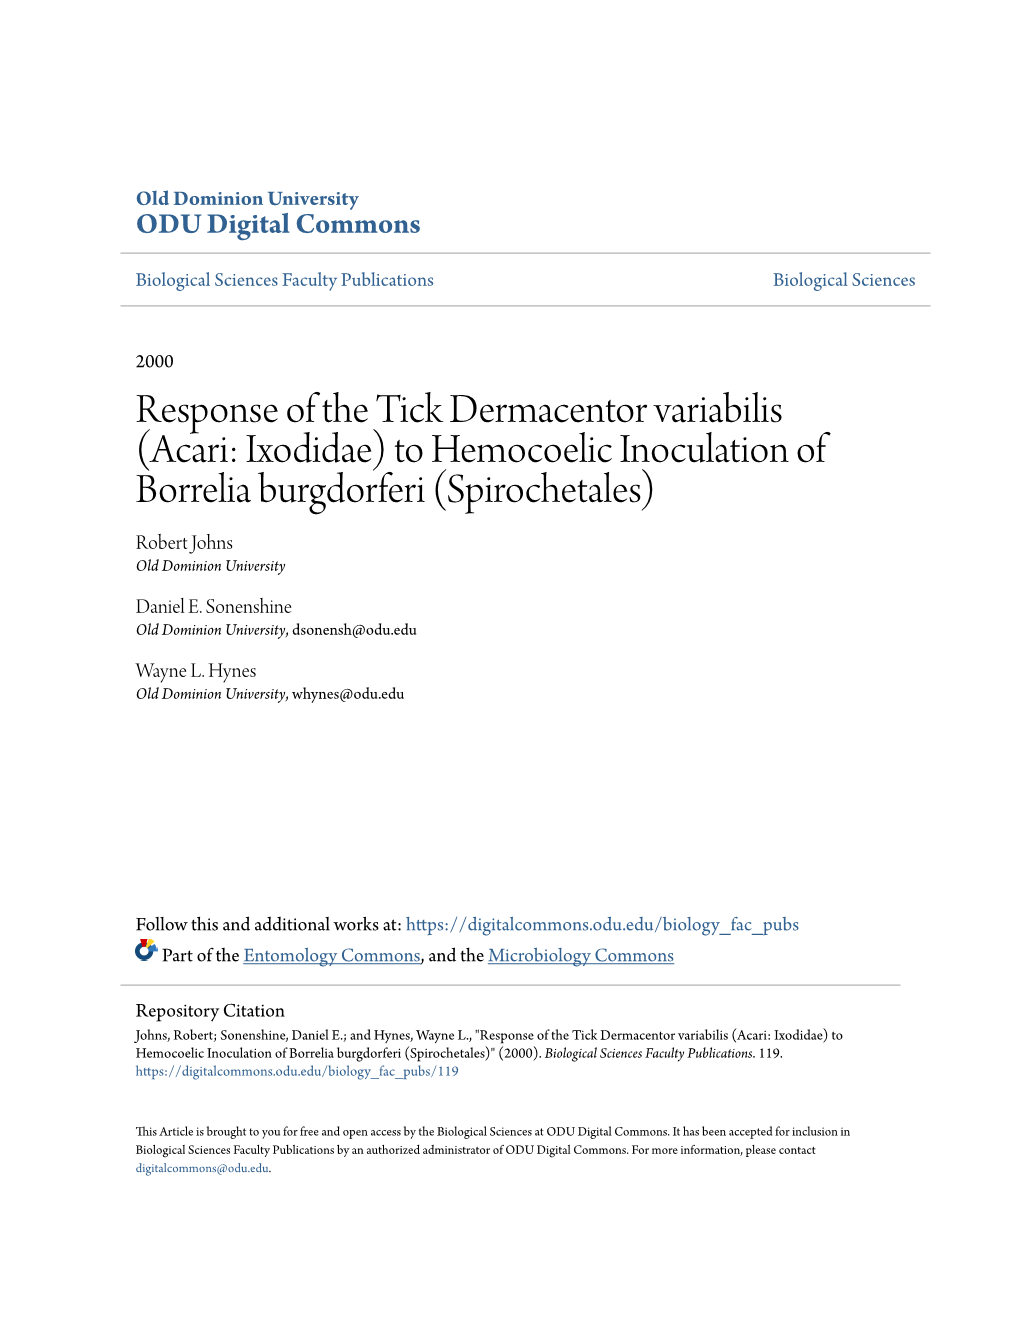 Response of the Tick Dermacentor Variabilis (Acari: Ixodidae) to Hemocoelic Inoculation of Borrelia Burgdorferi (Spirochetales) Robert Johns Old Dominion University